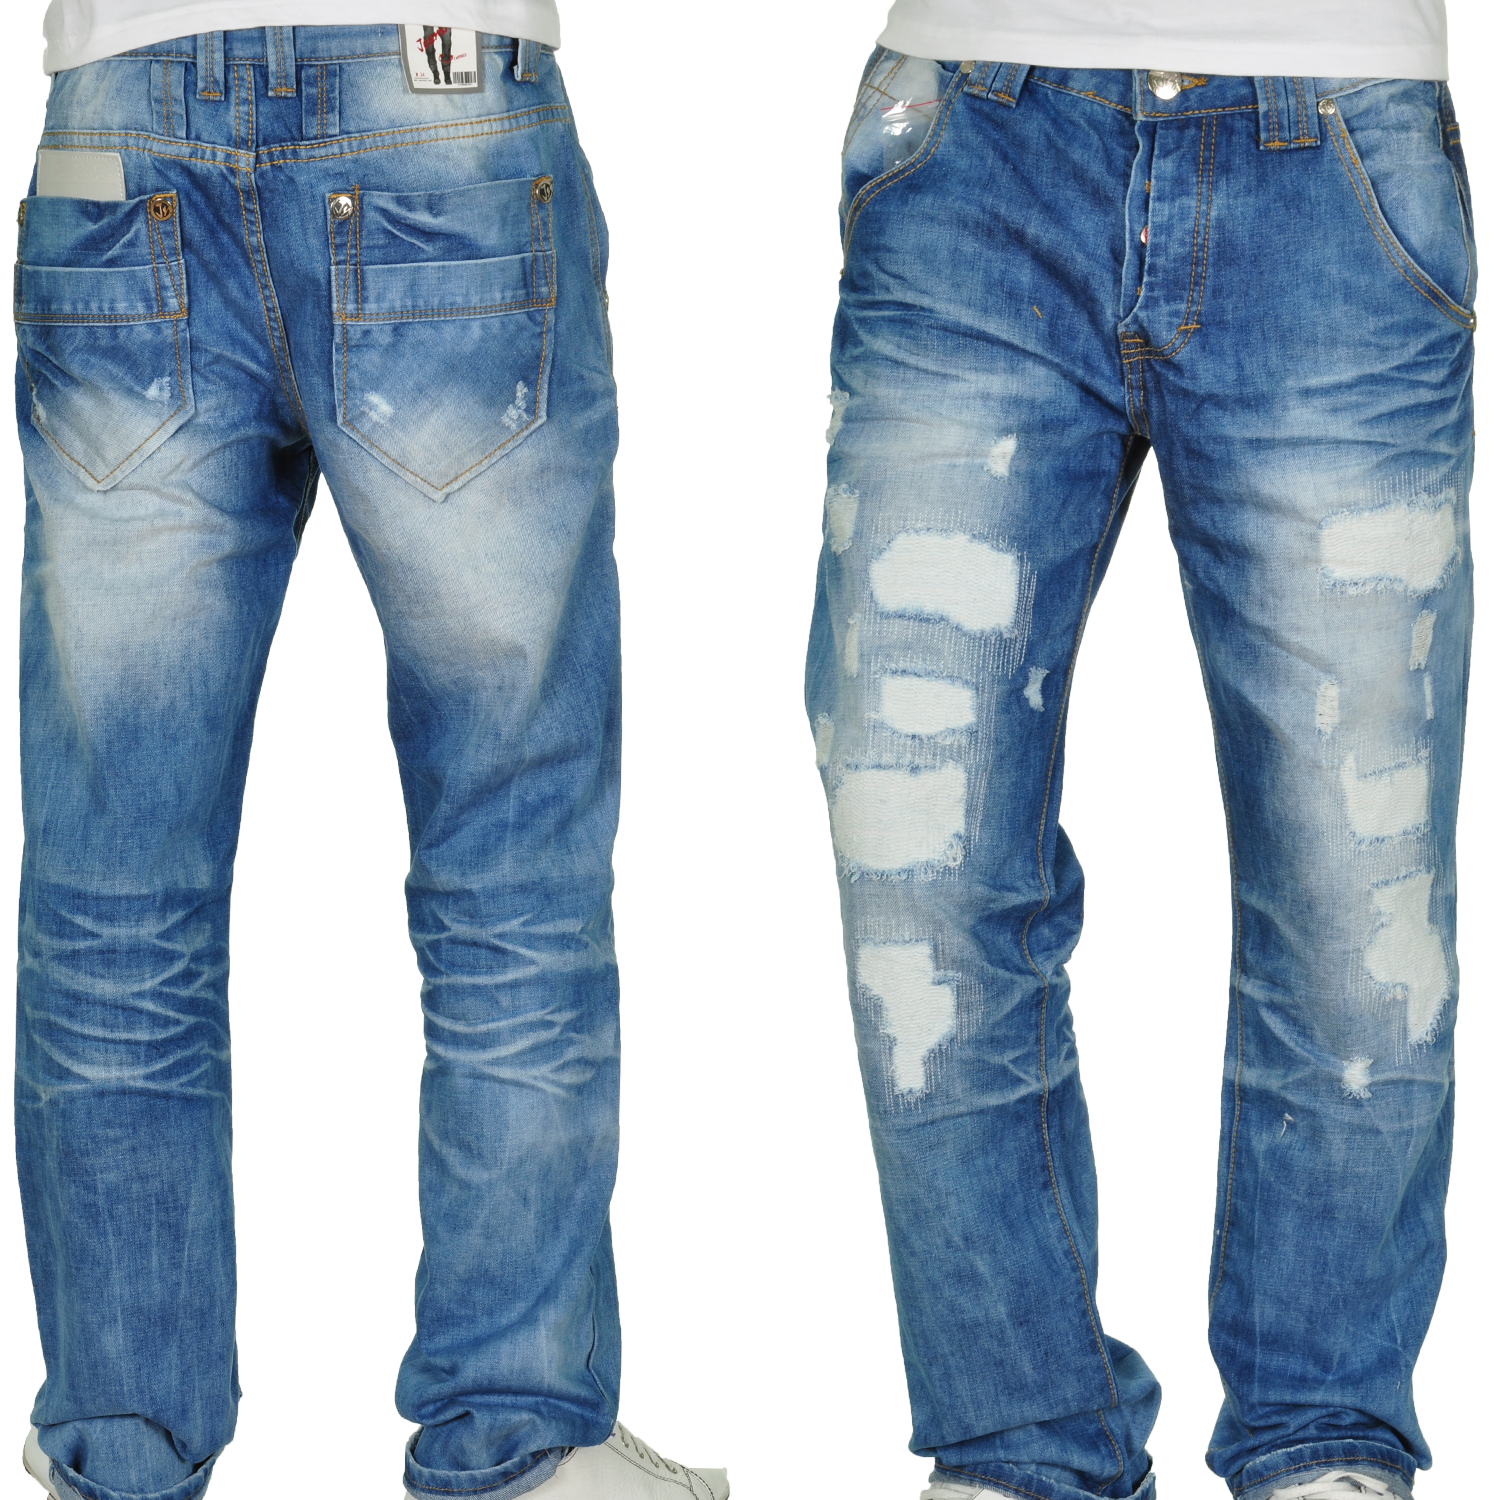 Foto Milano Style Jeansnet Comfort Fit Jeans Azul foto 92317